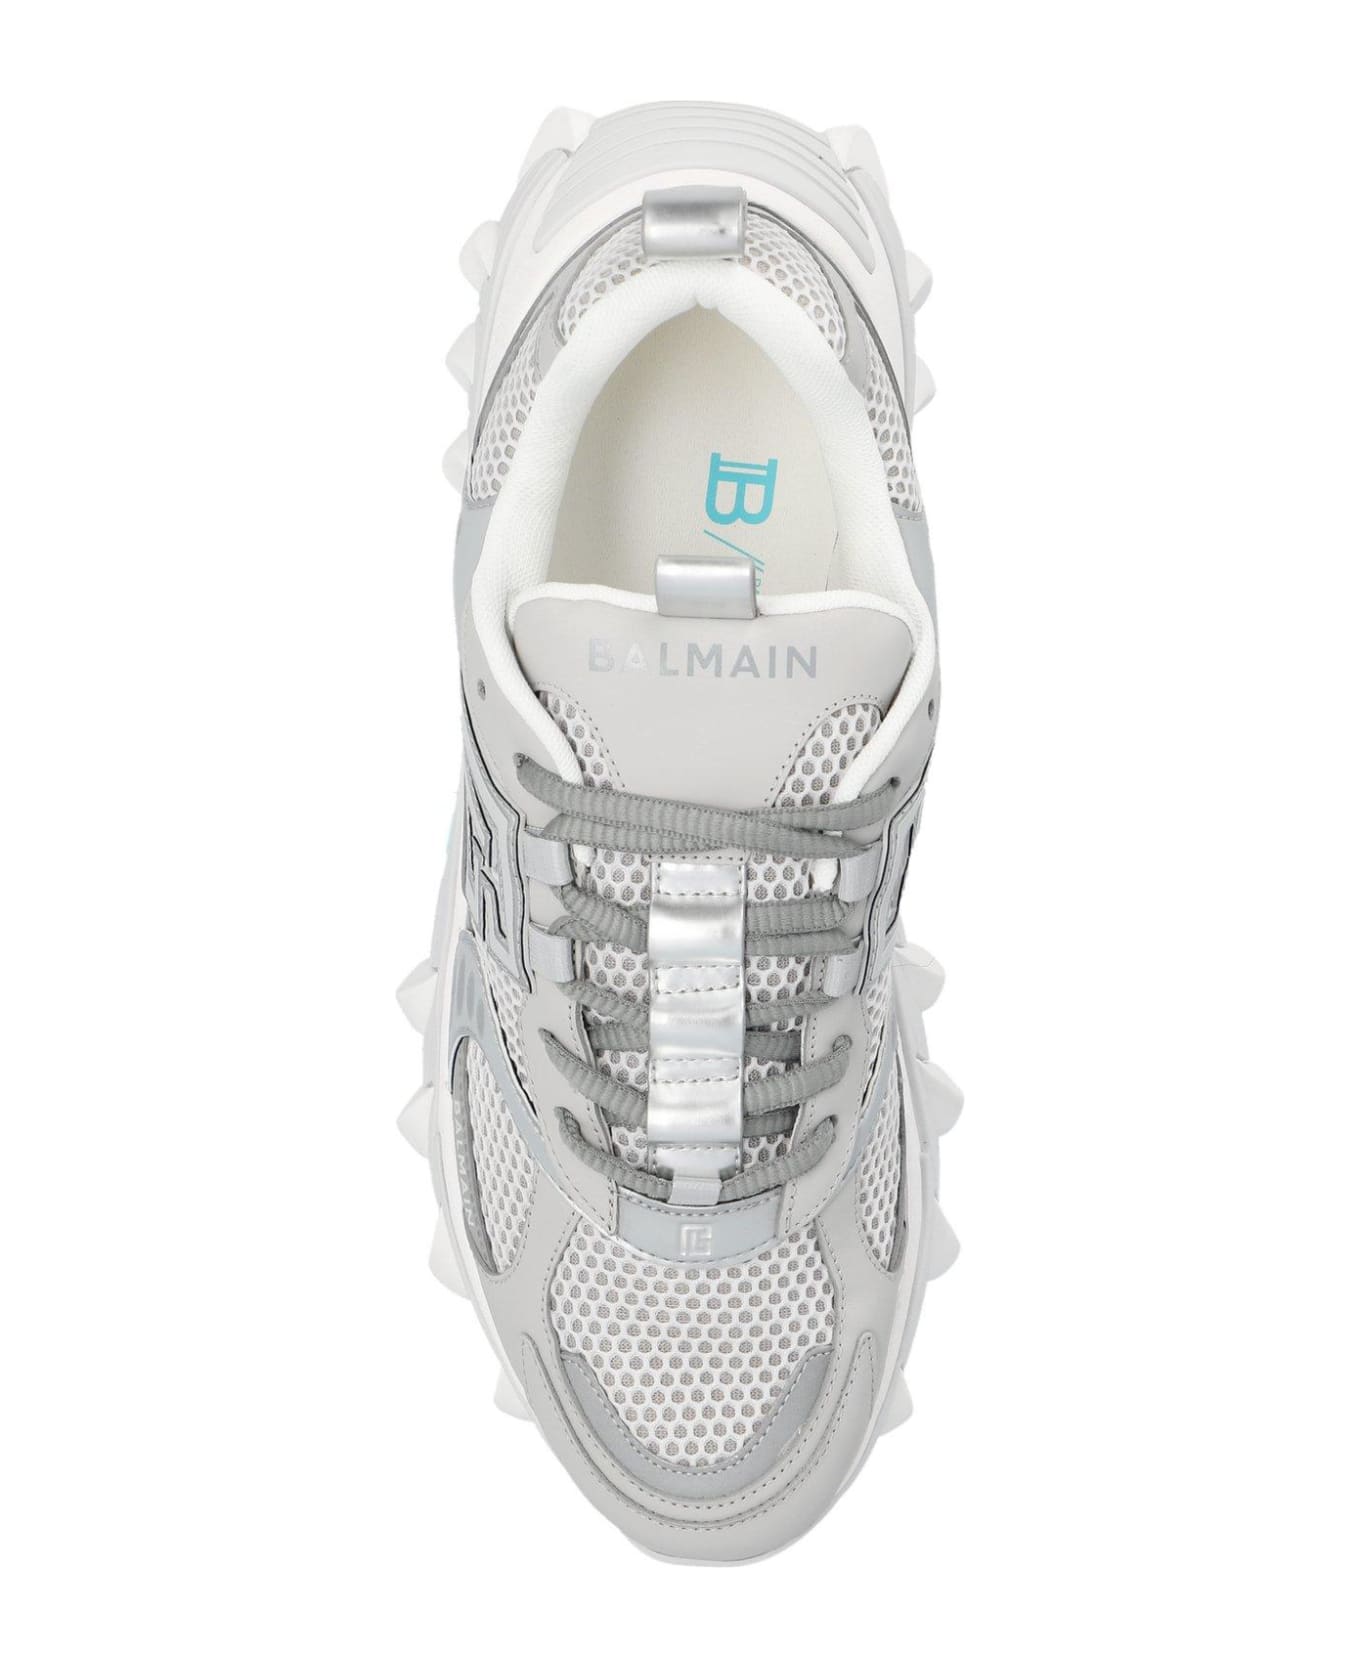 Balmain B-east Pb Lace-up Sneakers - Turquoise/blanc